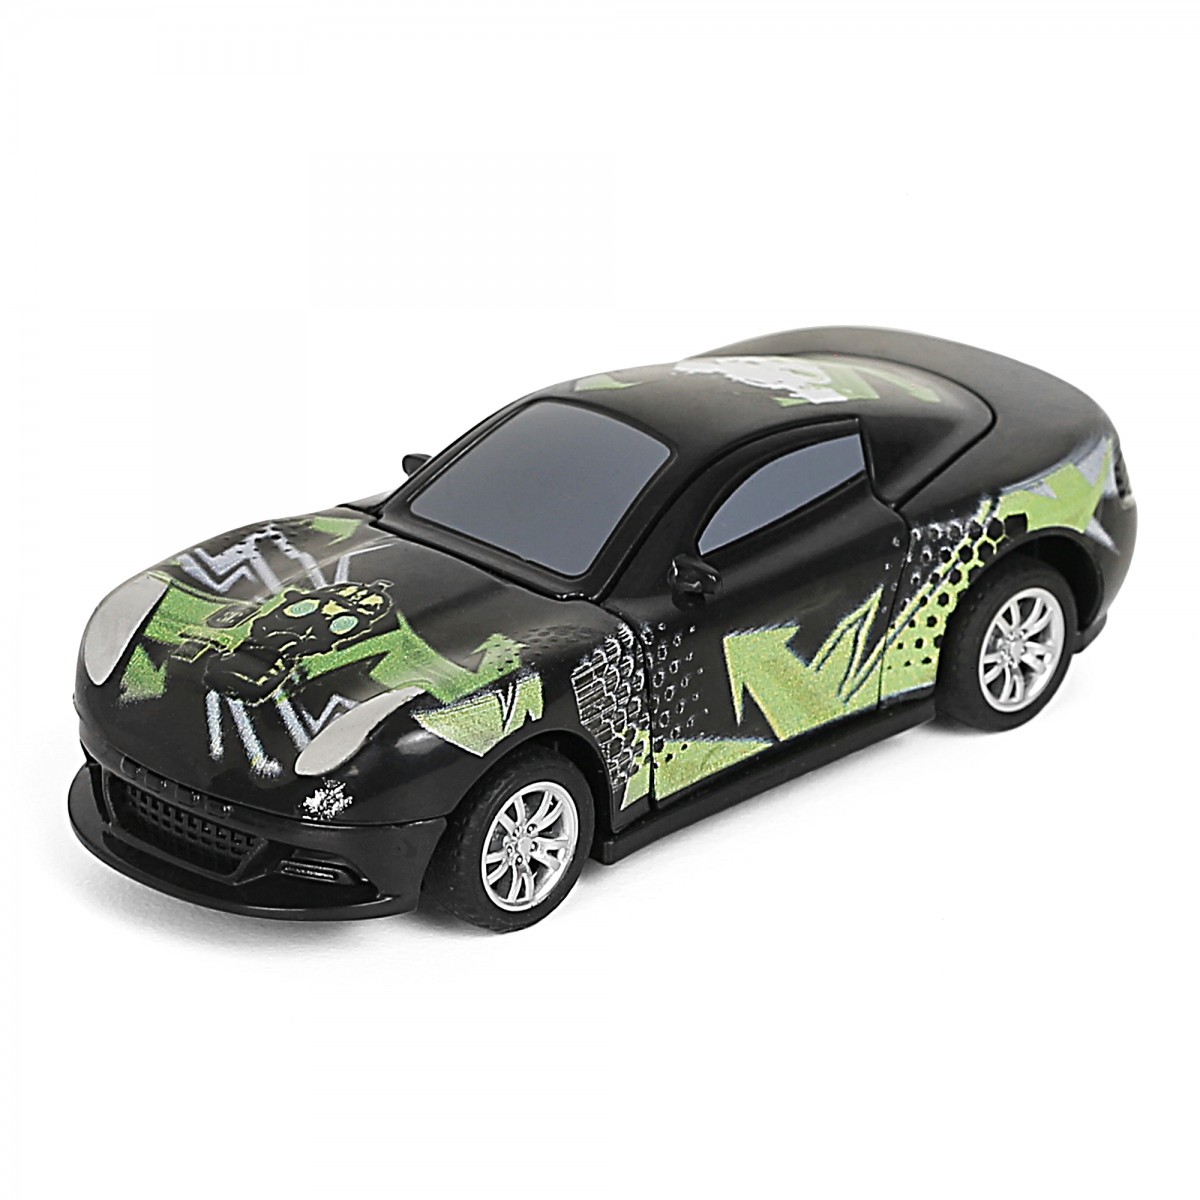 Ralleyz Pull Back Crash Car, 2 Modes Racing Stunt Vehicle Toy, Crash Car, Racing Toy, Friction High Speed Car, Kids for 3Y+, Black